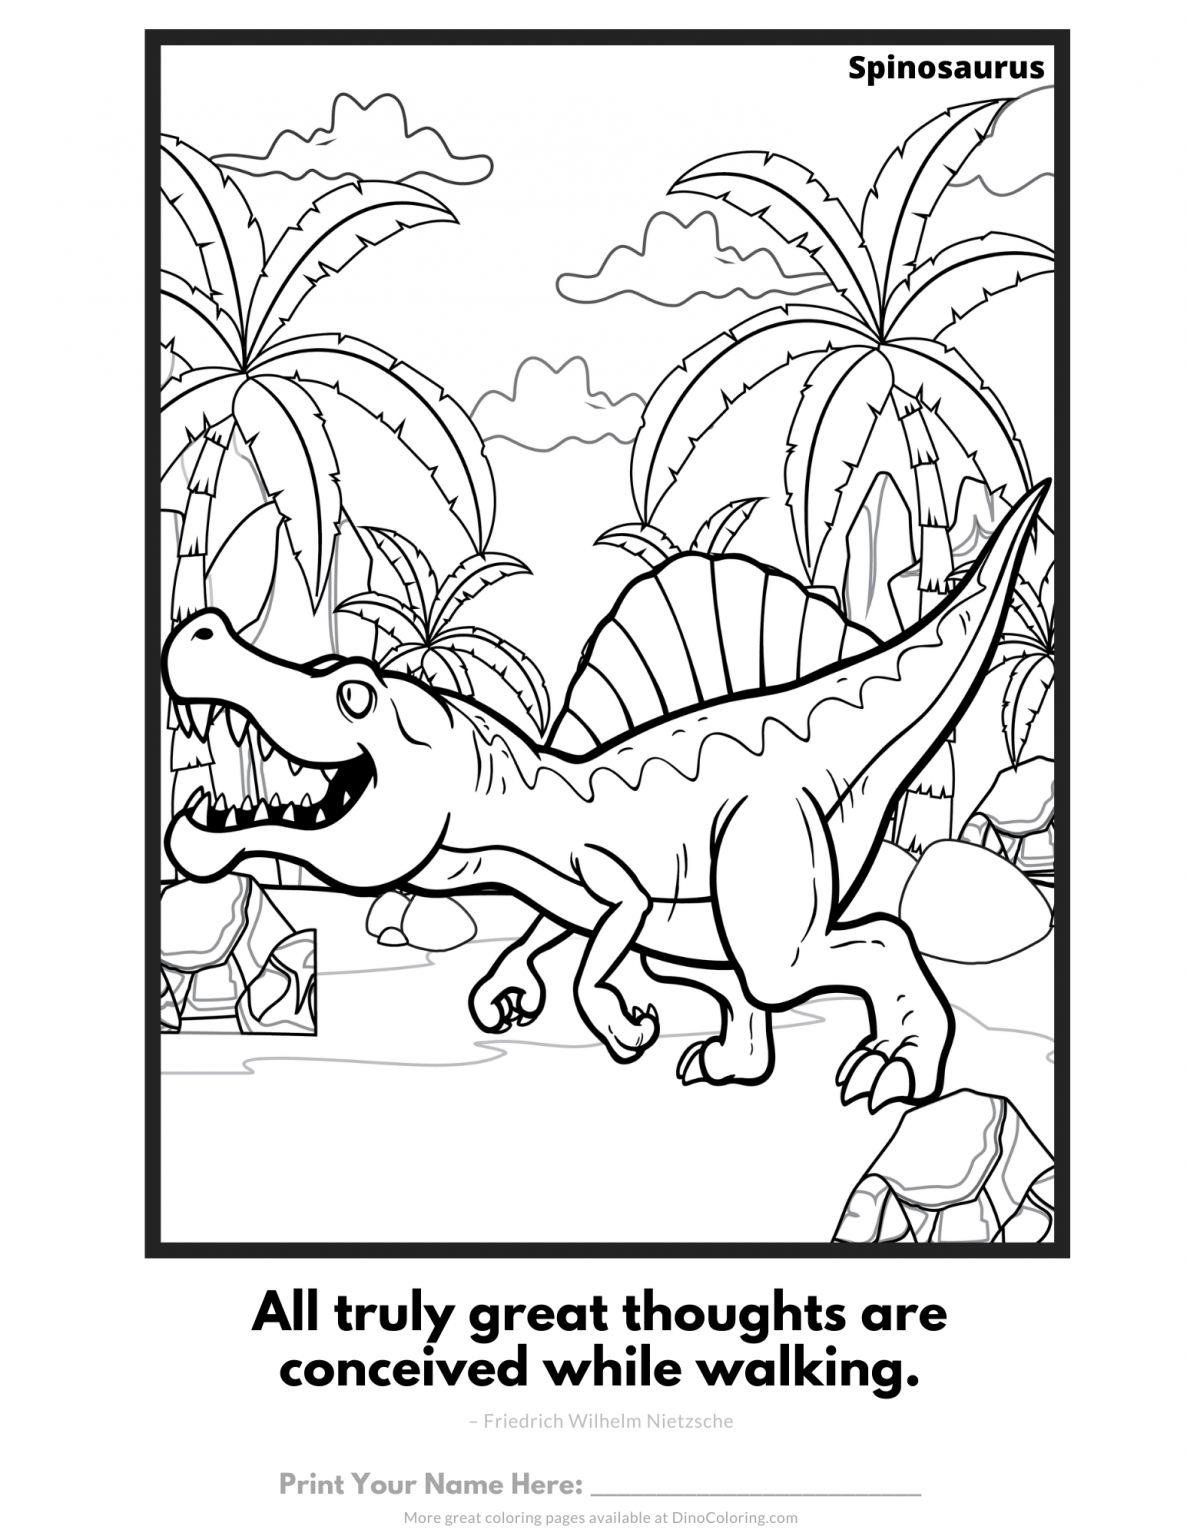 Spinosaurus Playing Around - Dinosaur Coloring Pages